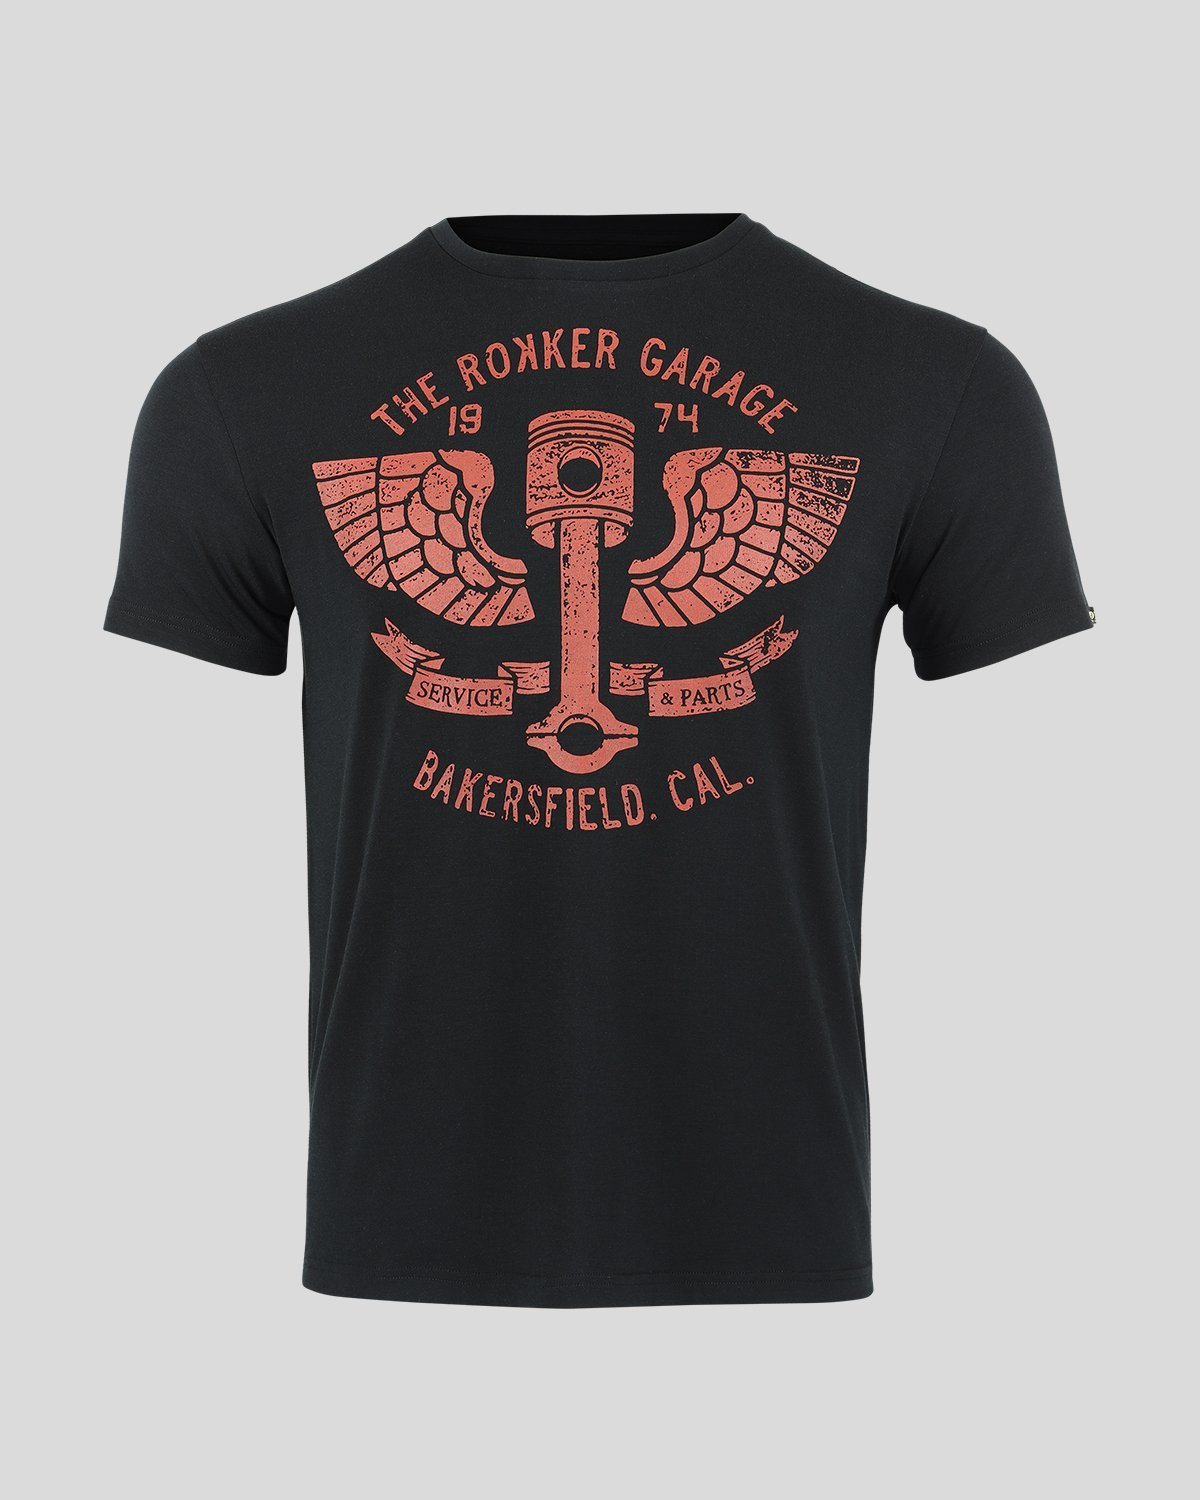 Performance Tee Bakersfield Black T-Shirt The Rokker Company 